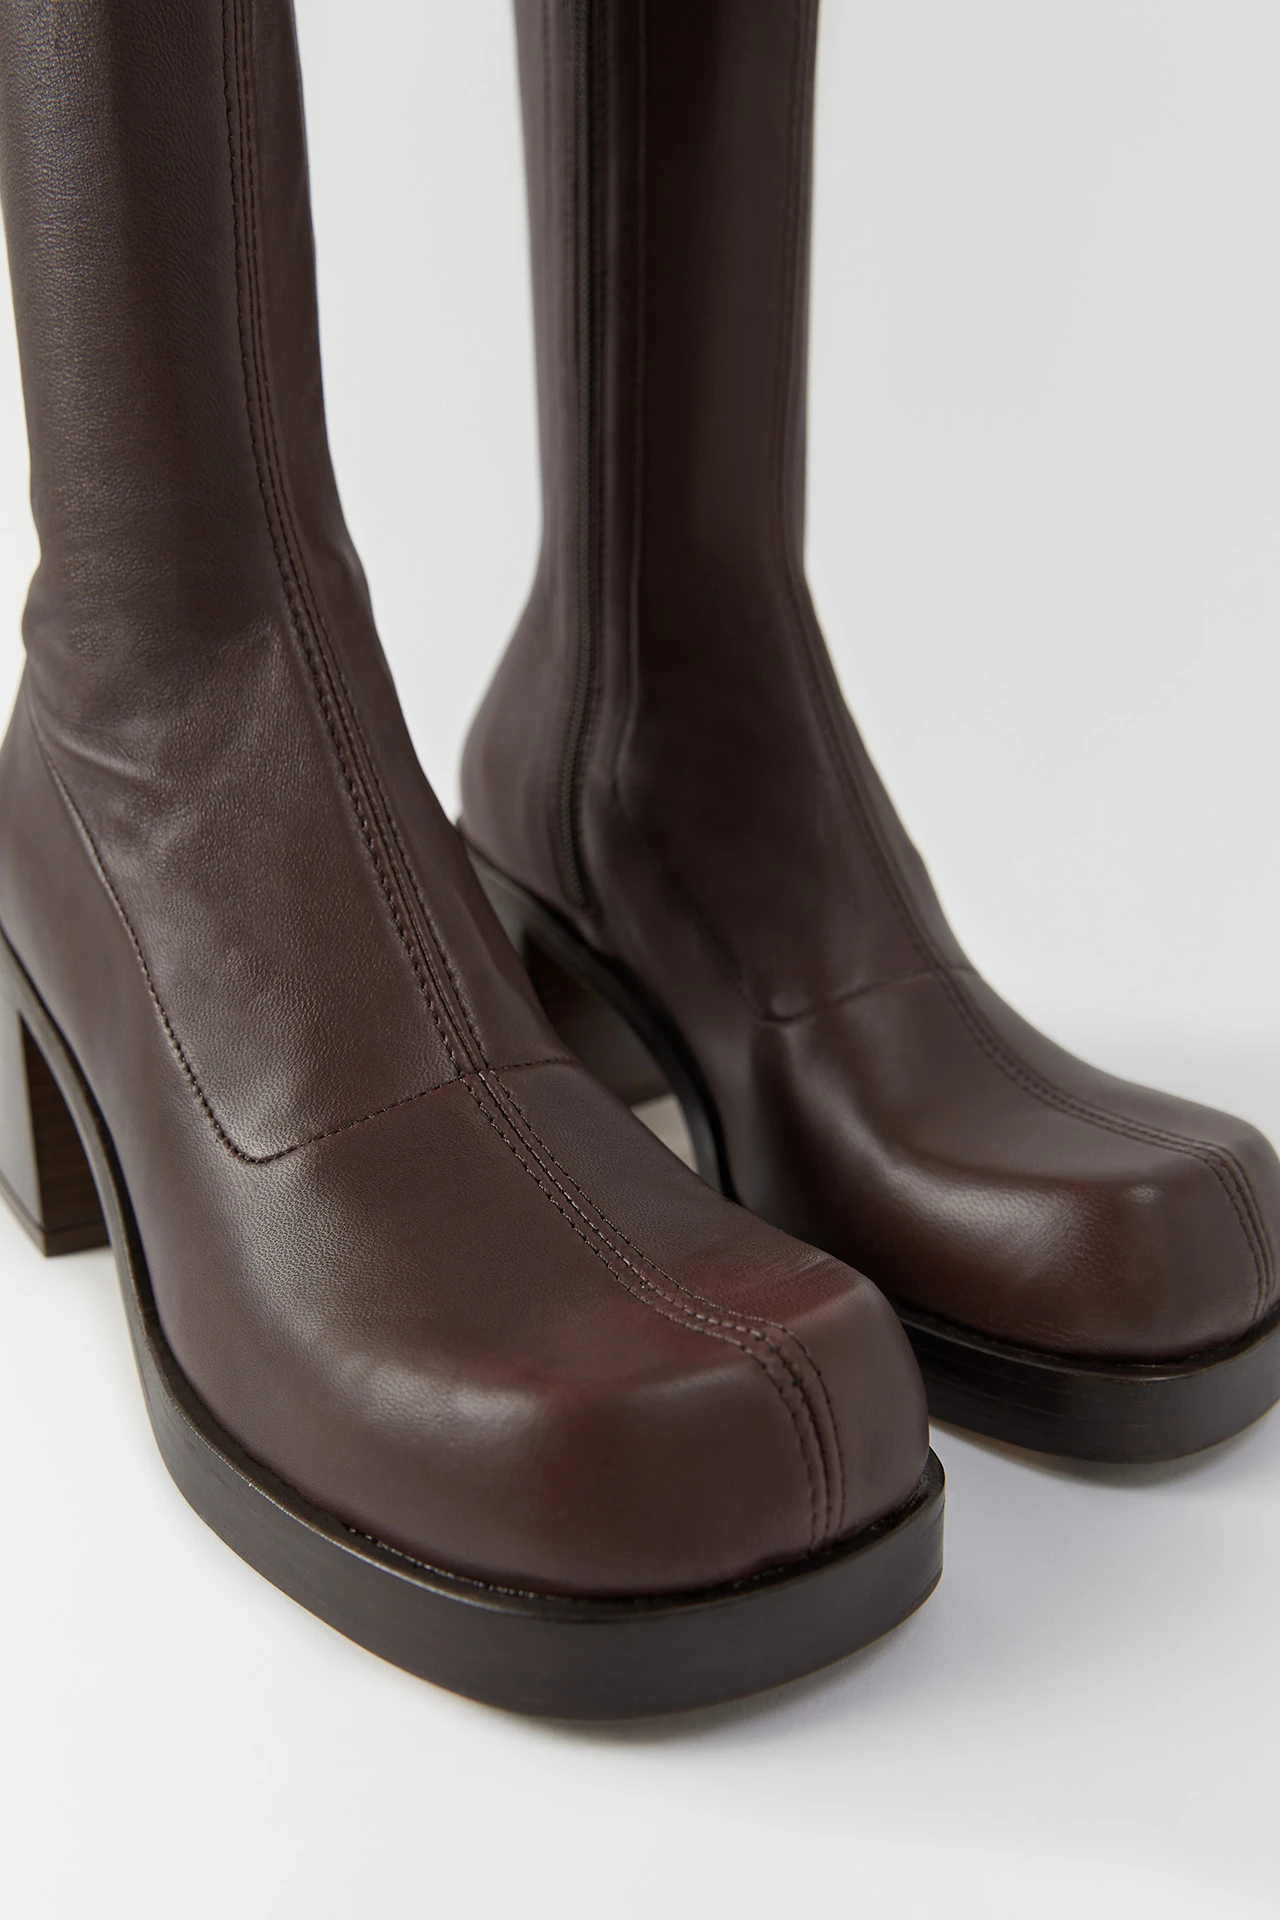 miista-hedy-brown-tall-boots-3